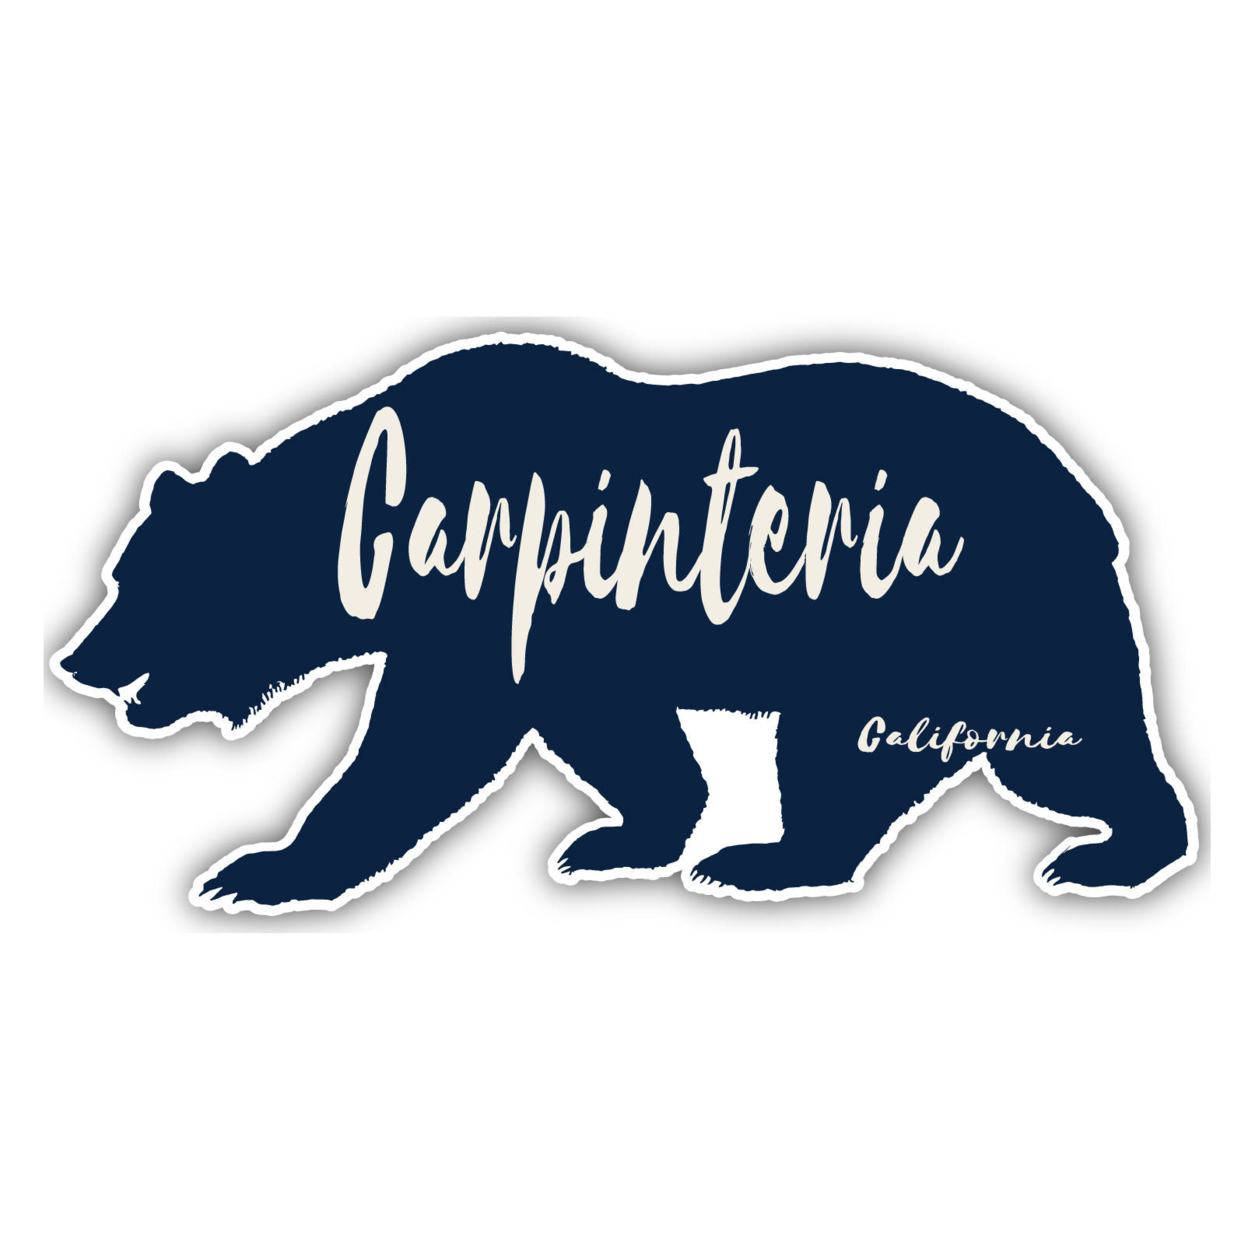 Carpinteria California Souvenir Decorative Stickers (Choose Theme And Size) - 4-Pack, 8-Inch, Bear